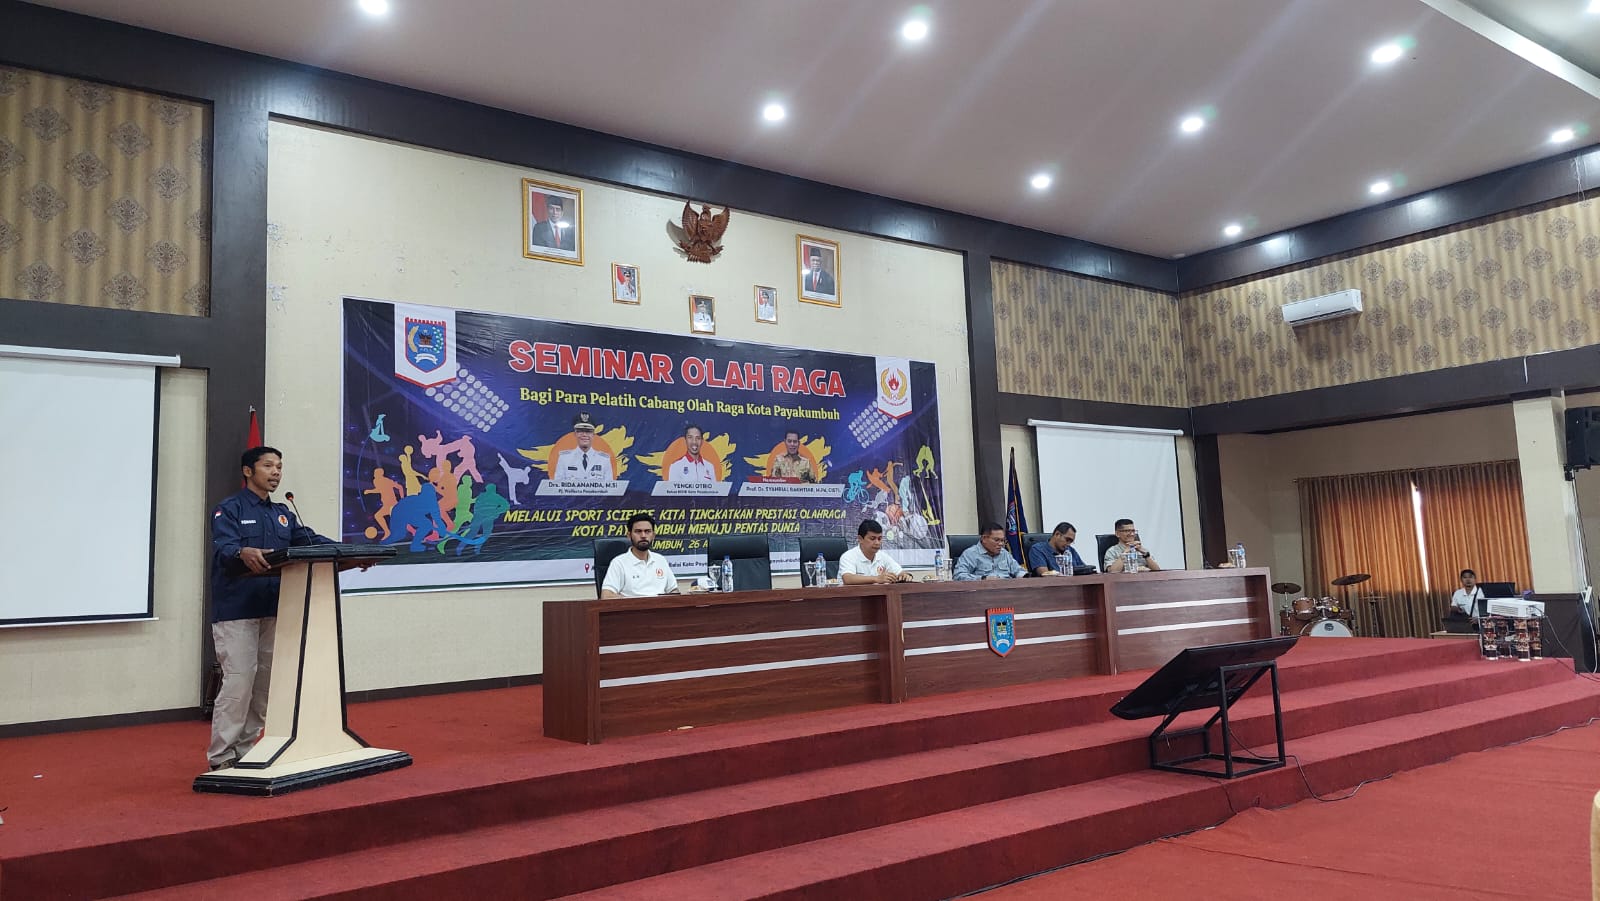  Seminar Olahraga yang digelar KONI untuk para pelatih cabang olahraga (cabor) se-Kota Payakumbuh